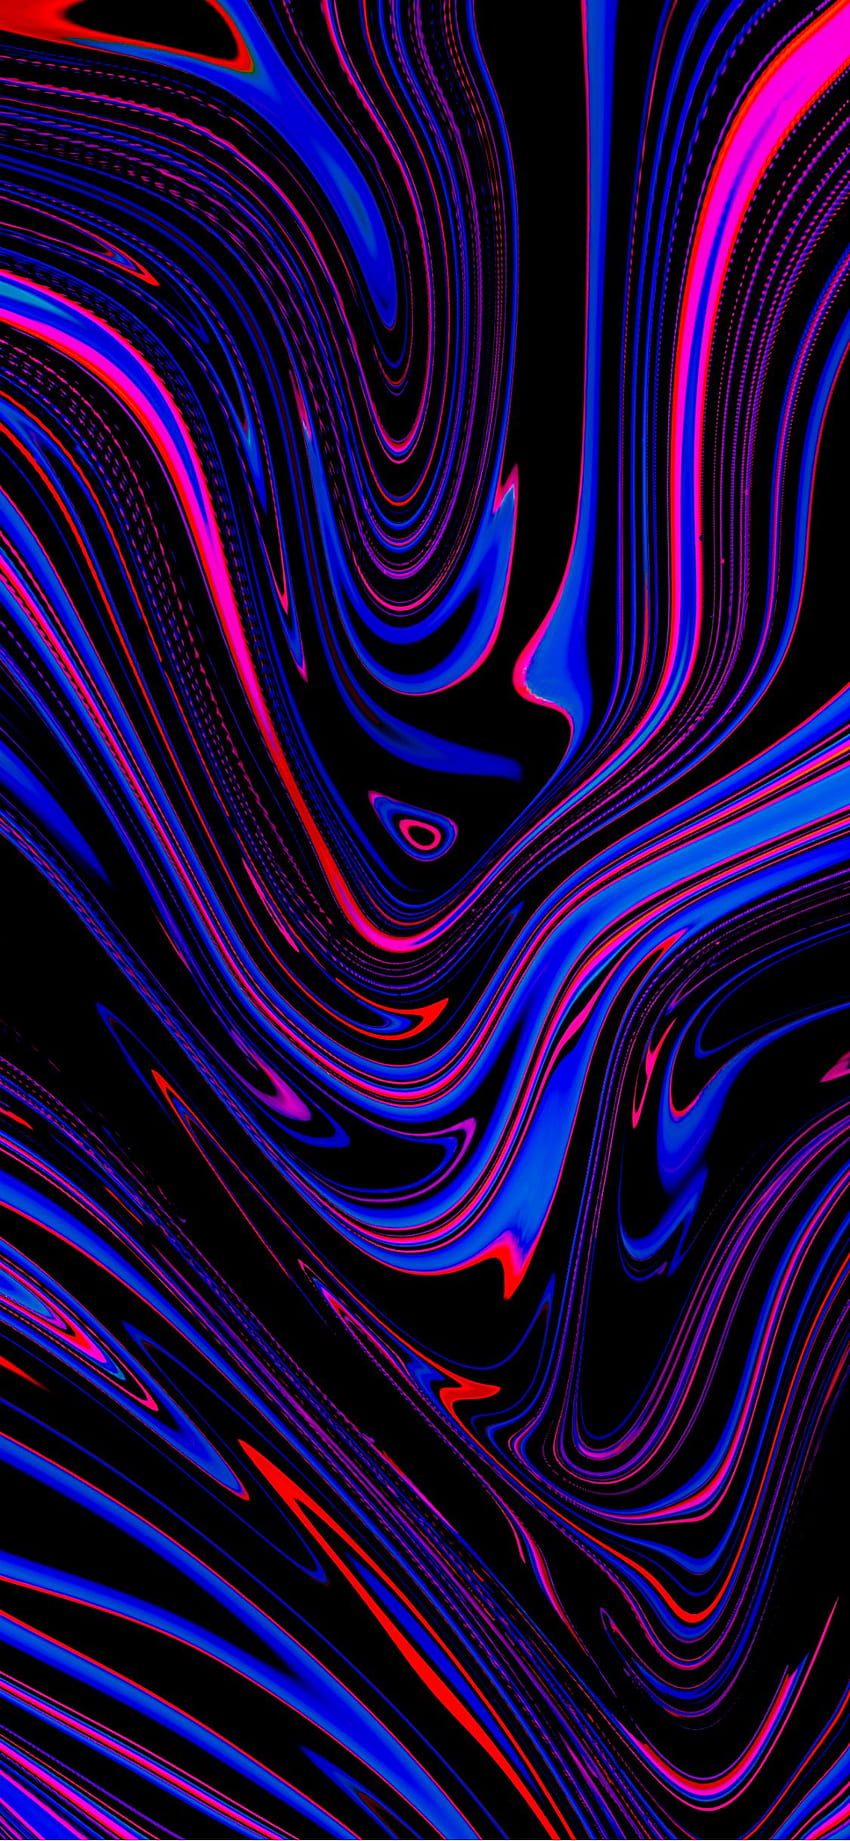 Iphone abstracto líquido, burbujas onduladas coloridas fondo de pantalla del teléfono